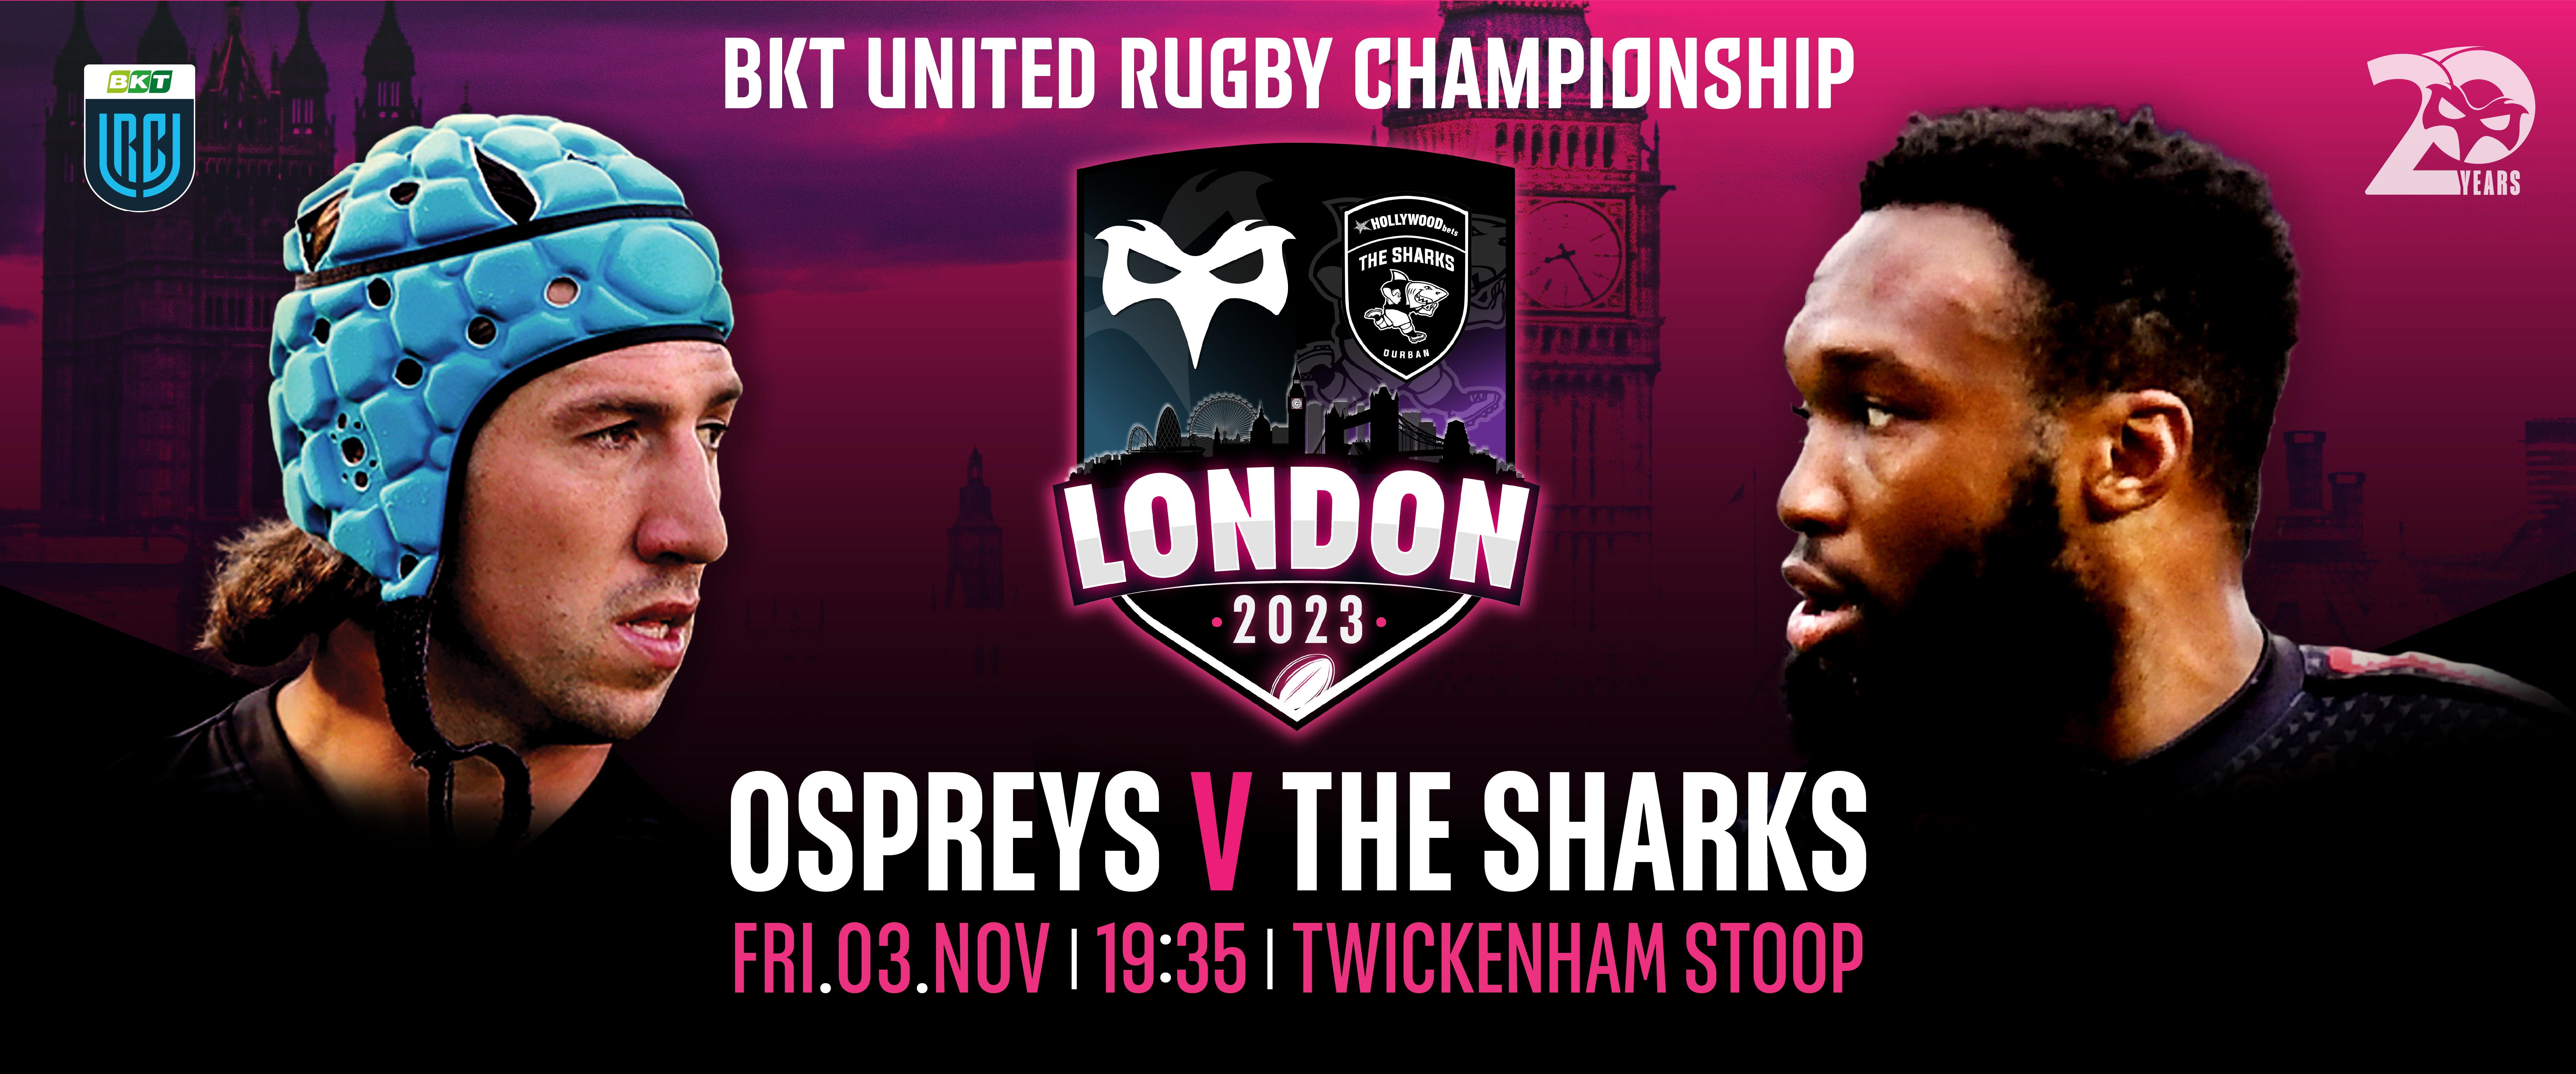 Ospreys v Sharks BKT URC London 2023